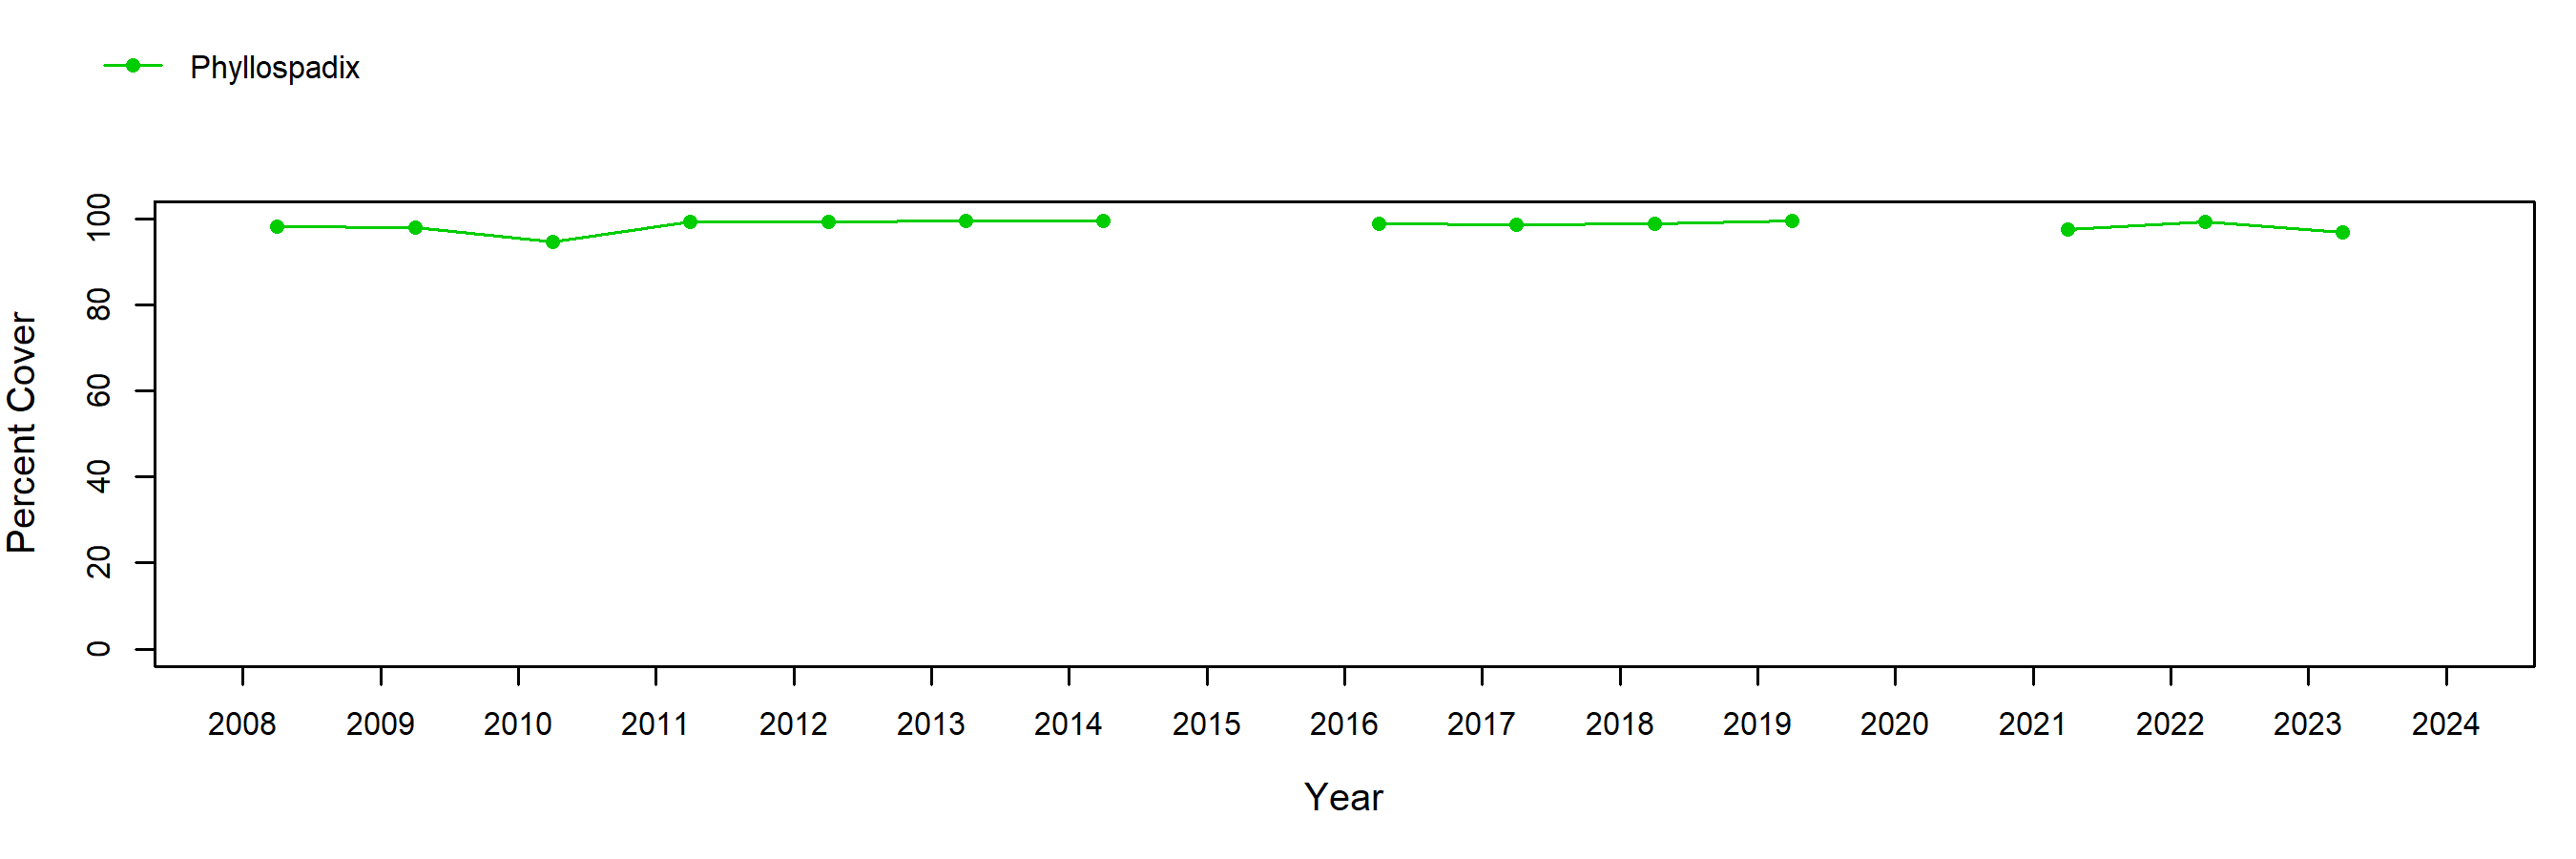 Kydikabbit Point surfgrass trend plot